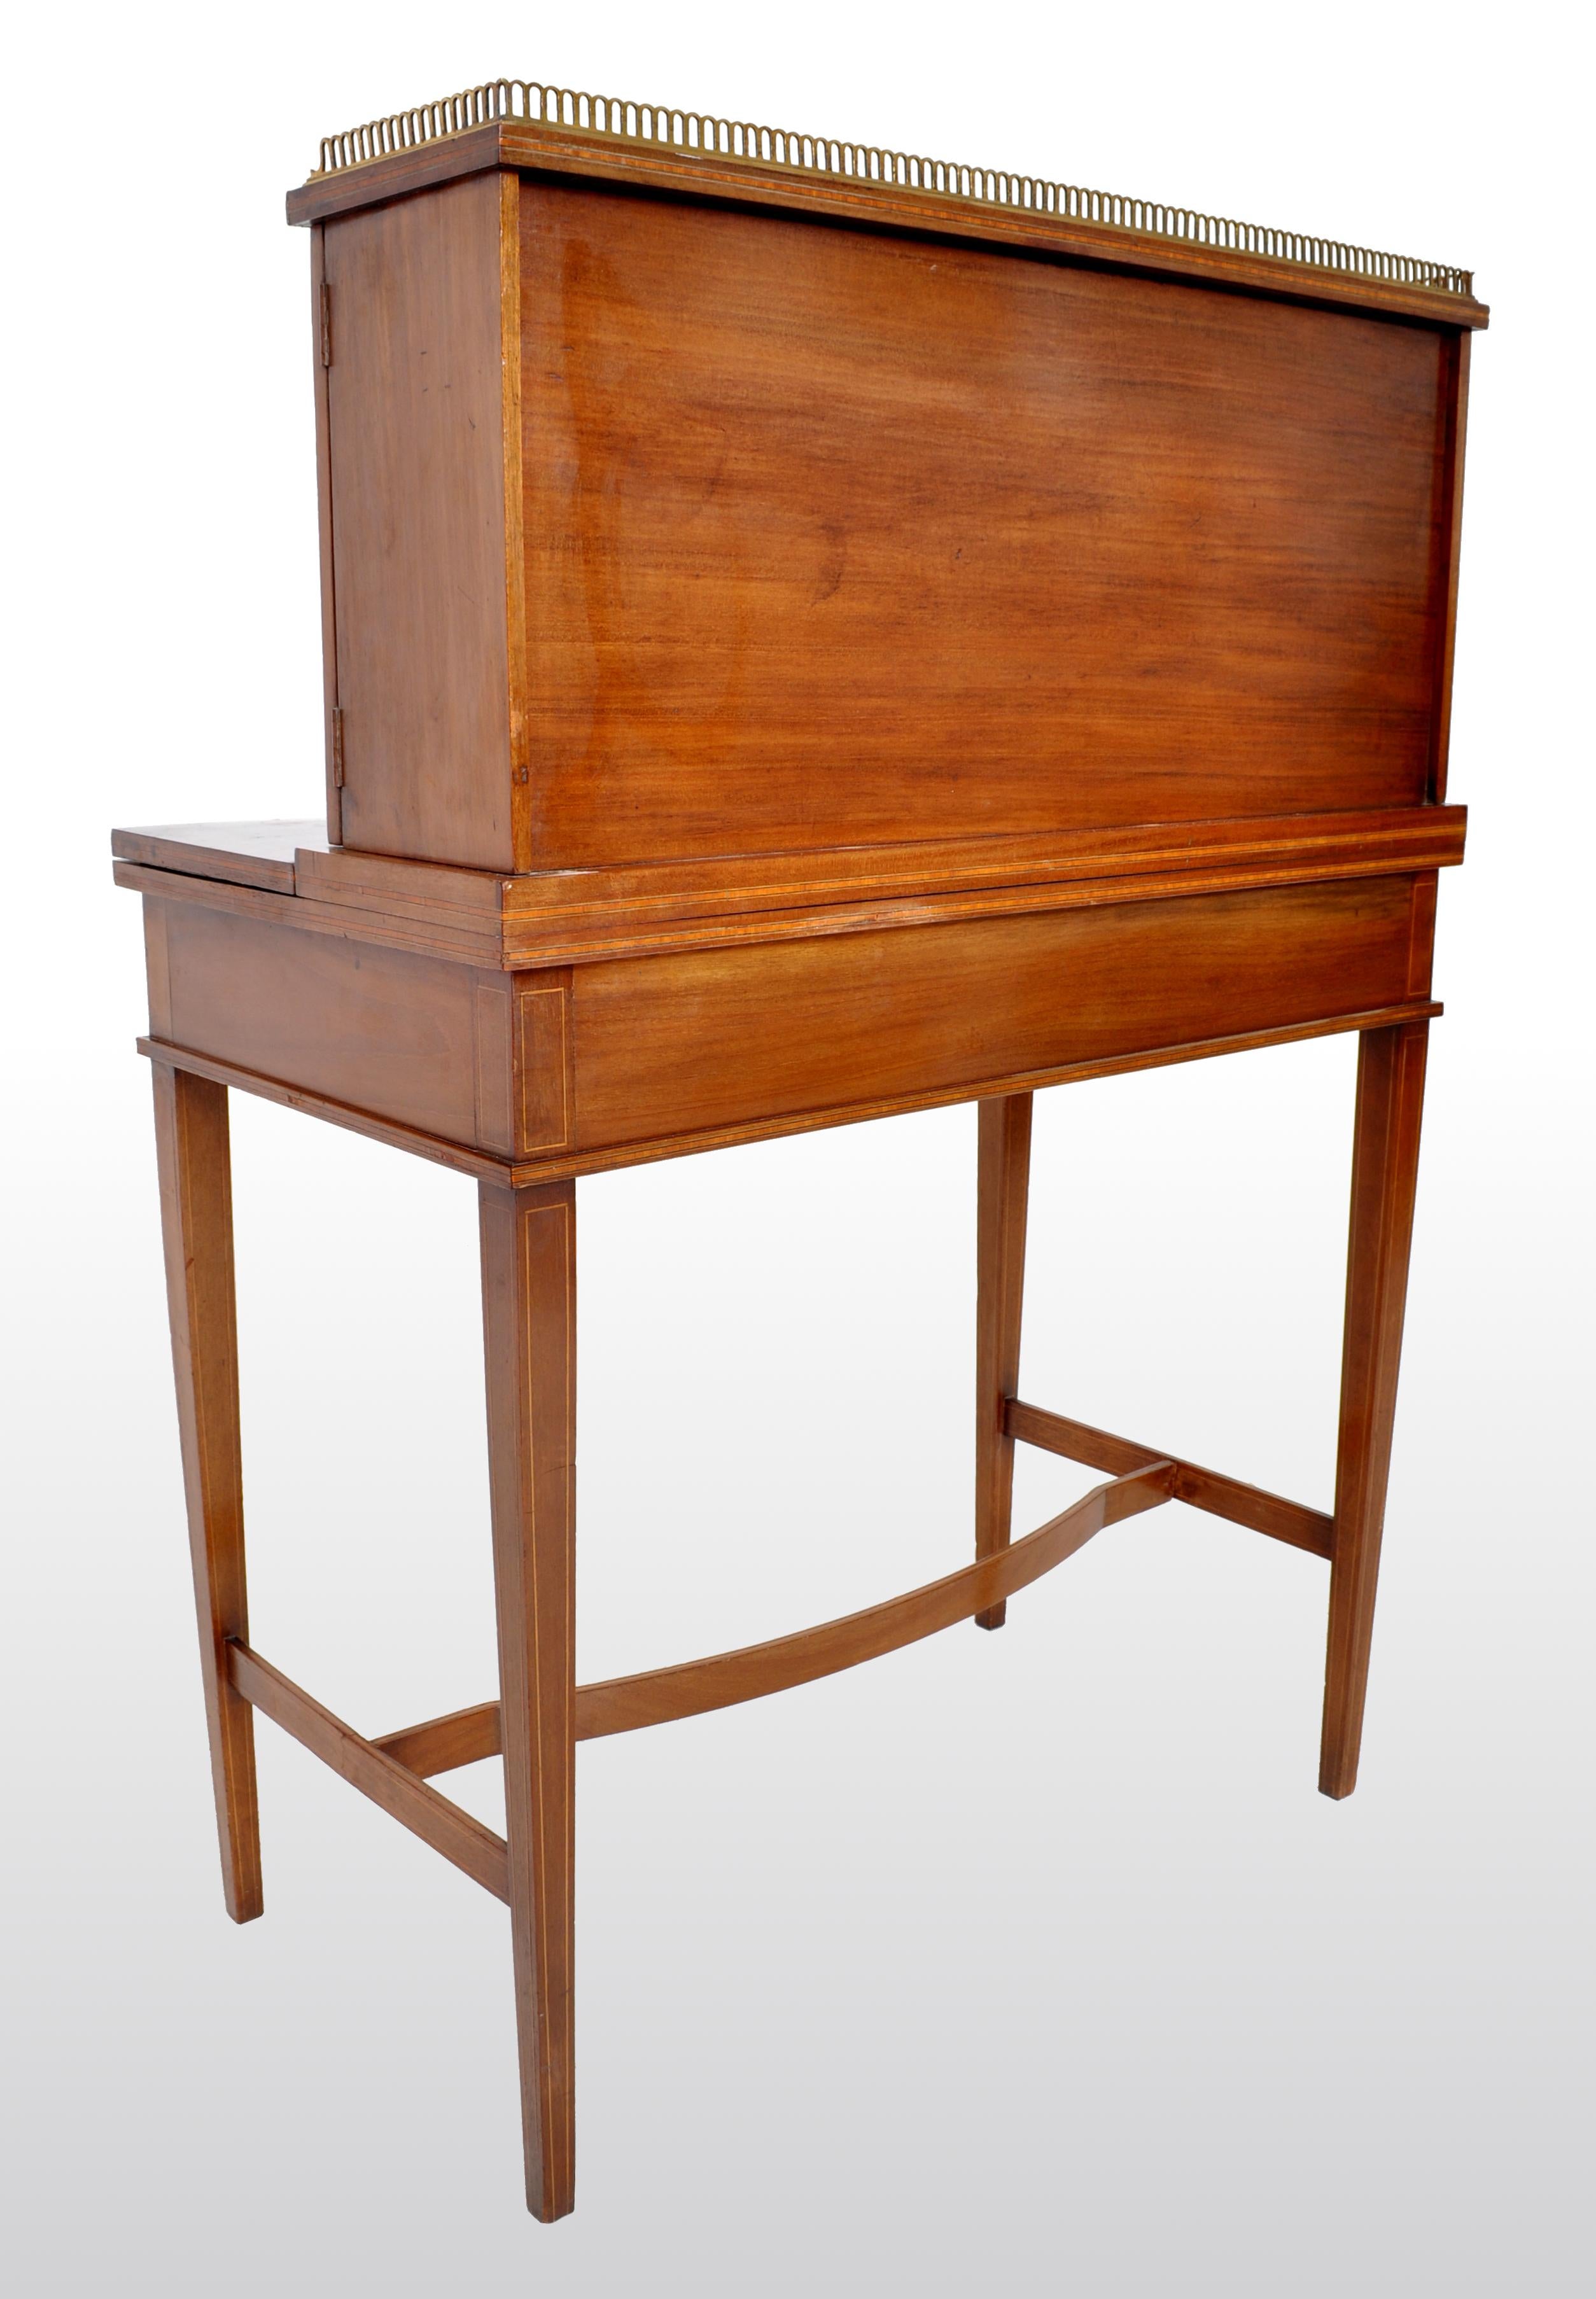 Antique Sheraton Revival Inlaid Mahogany Desk / Writing Table, circa 1895 10